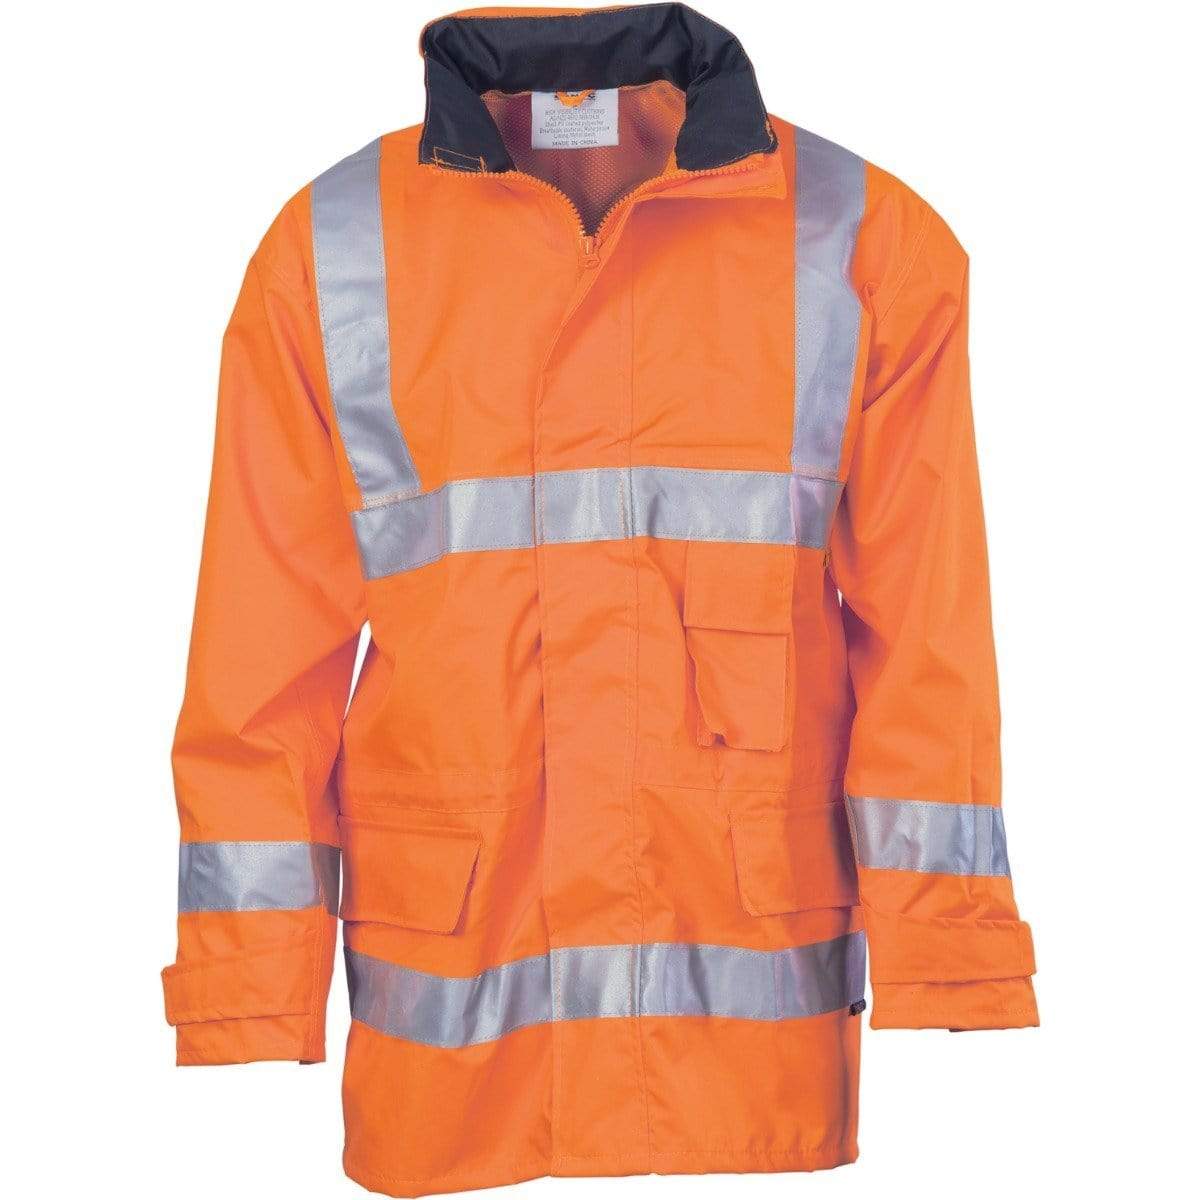 Dnc Workwear Hi-vis D/n Breathable Rain Jacket With 3m Reflective Tape - 3871 Work Wear DNC Workwear Orange S 